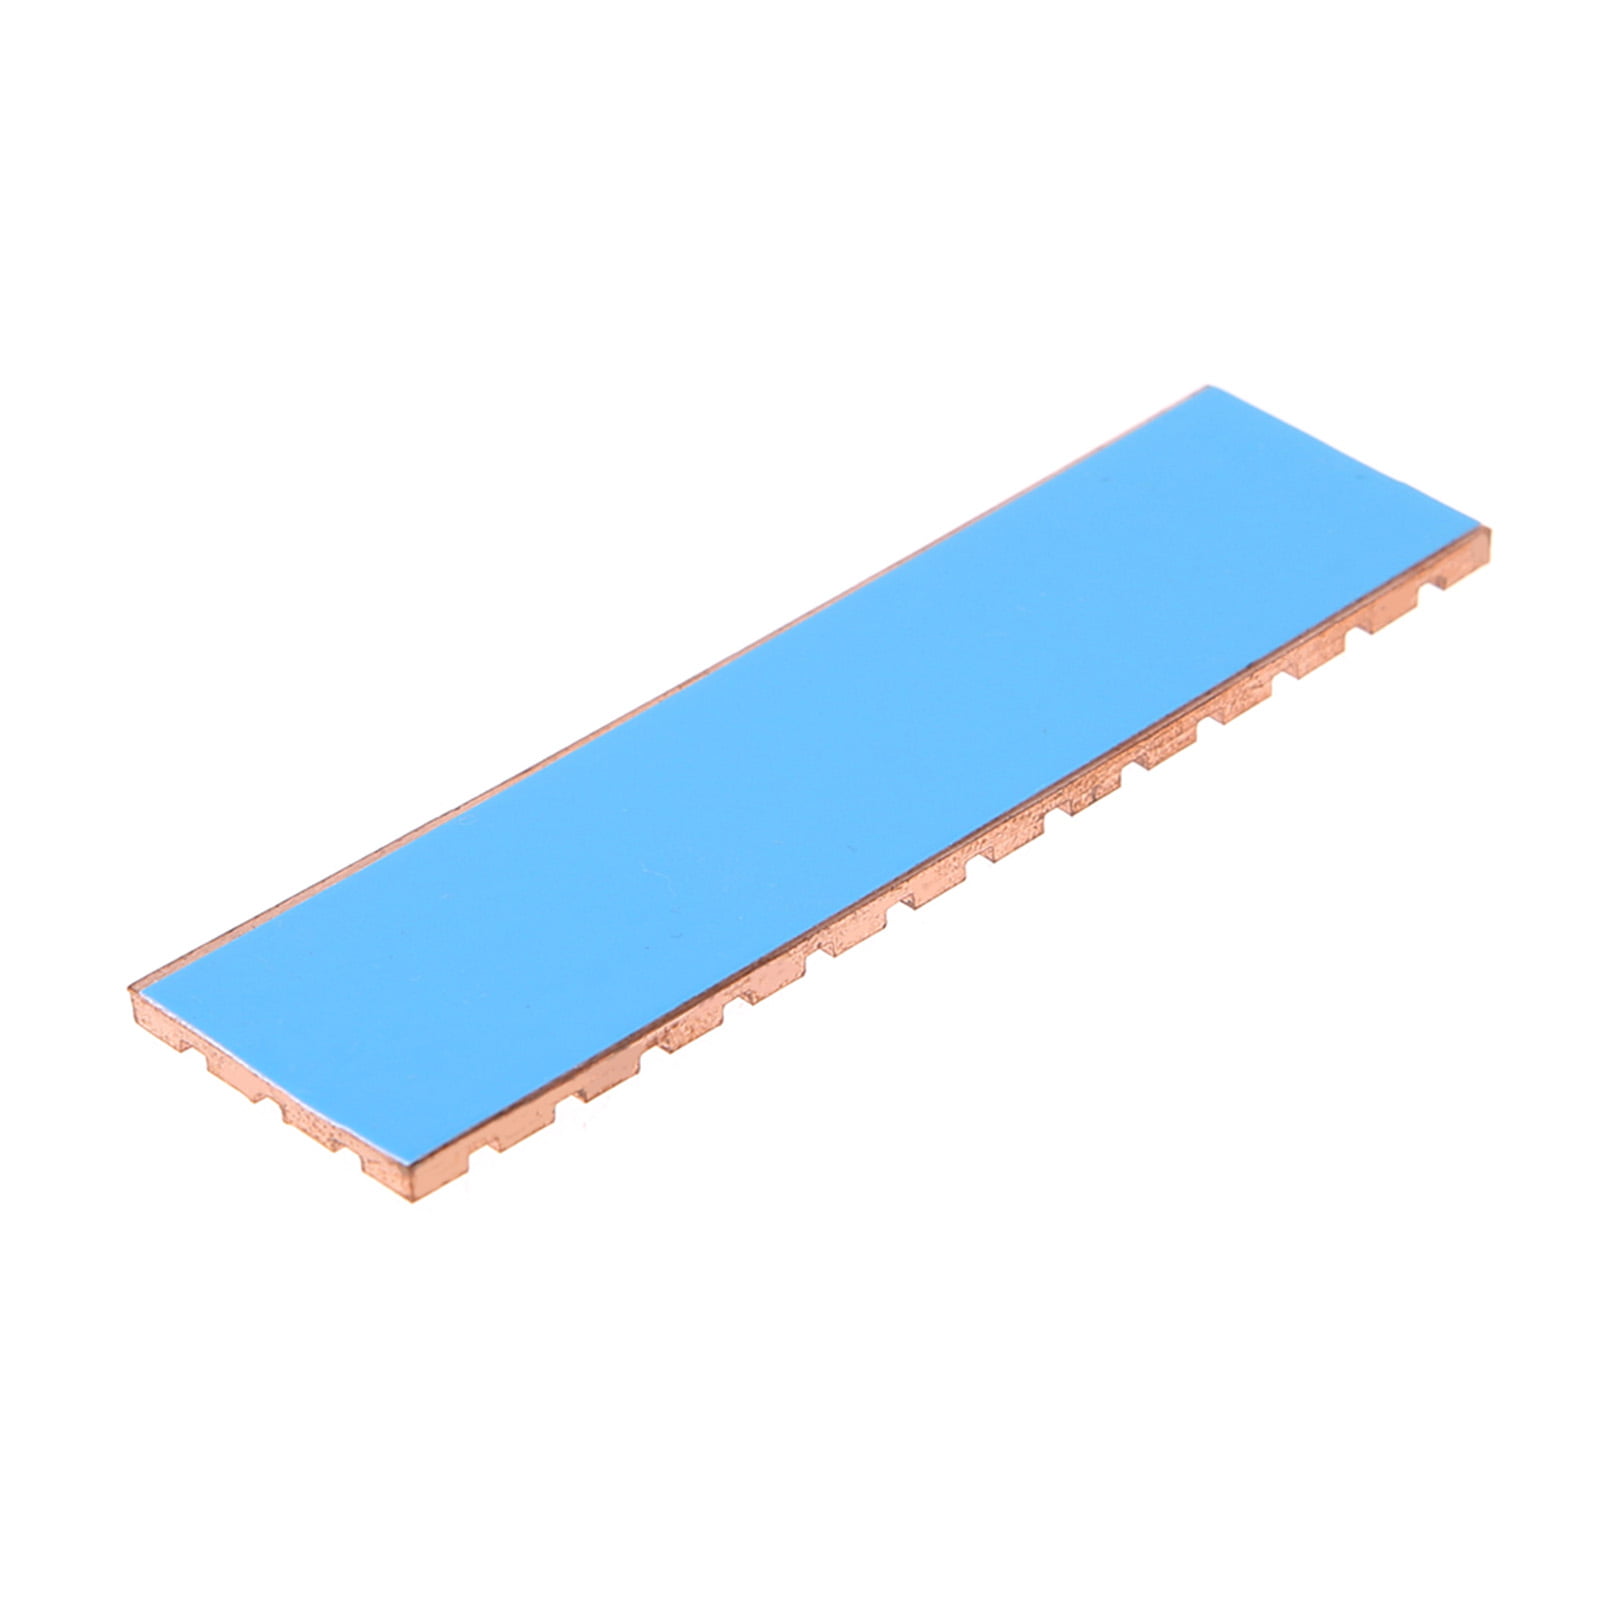 RingBuu Copper Heatsink Thermal Conductive Adhesive M.2 NGFF 2280 PCI-E NVME SSD 3#: 3mm